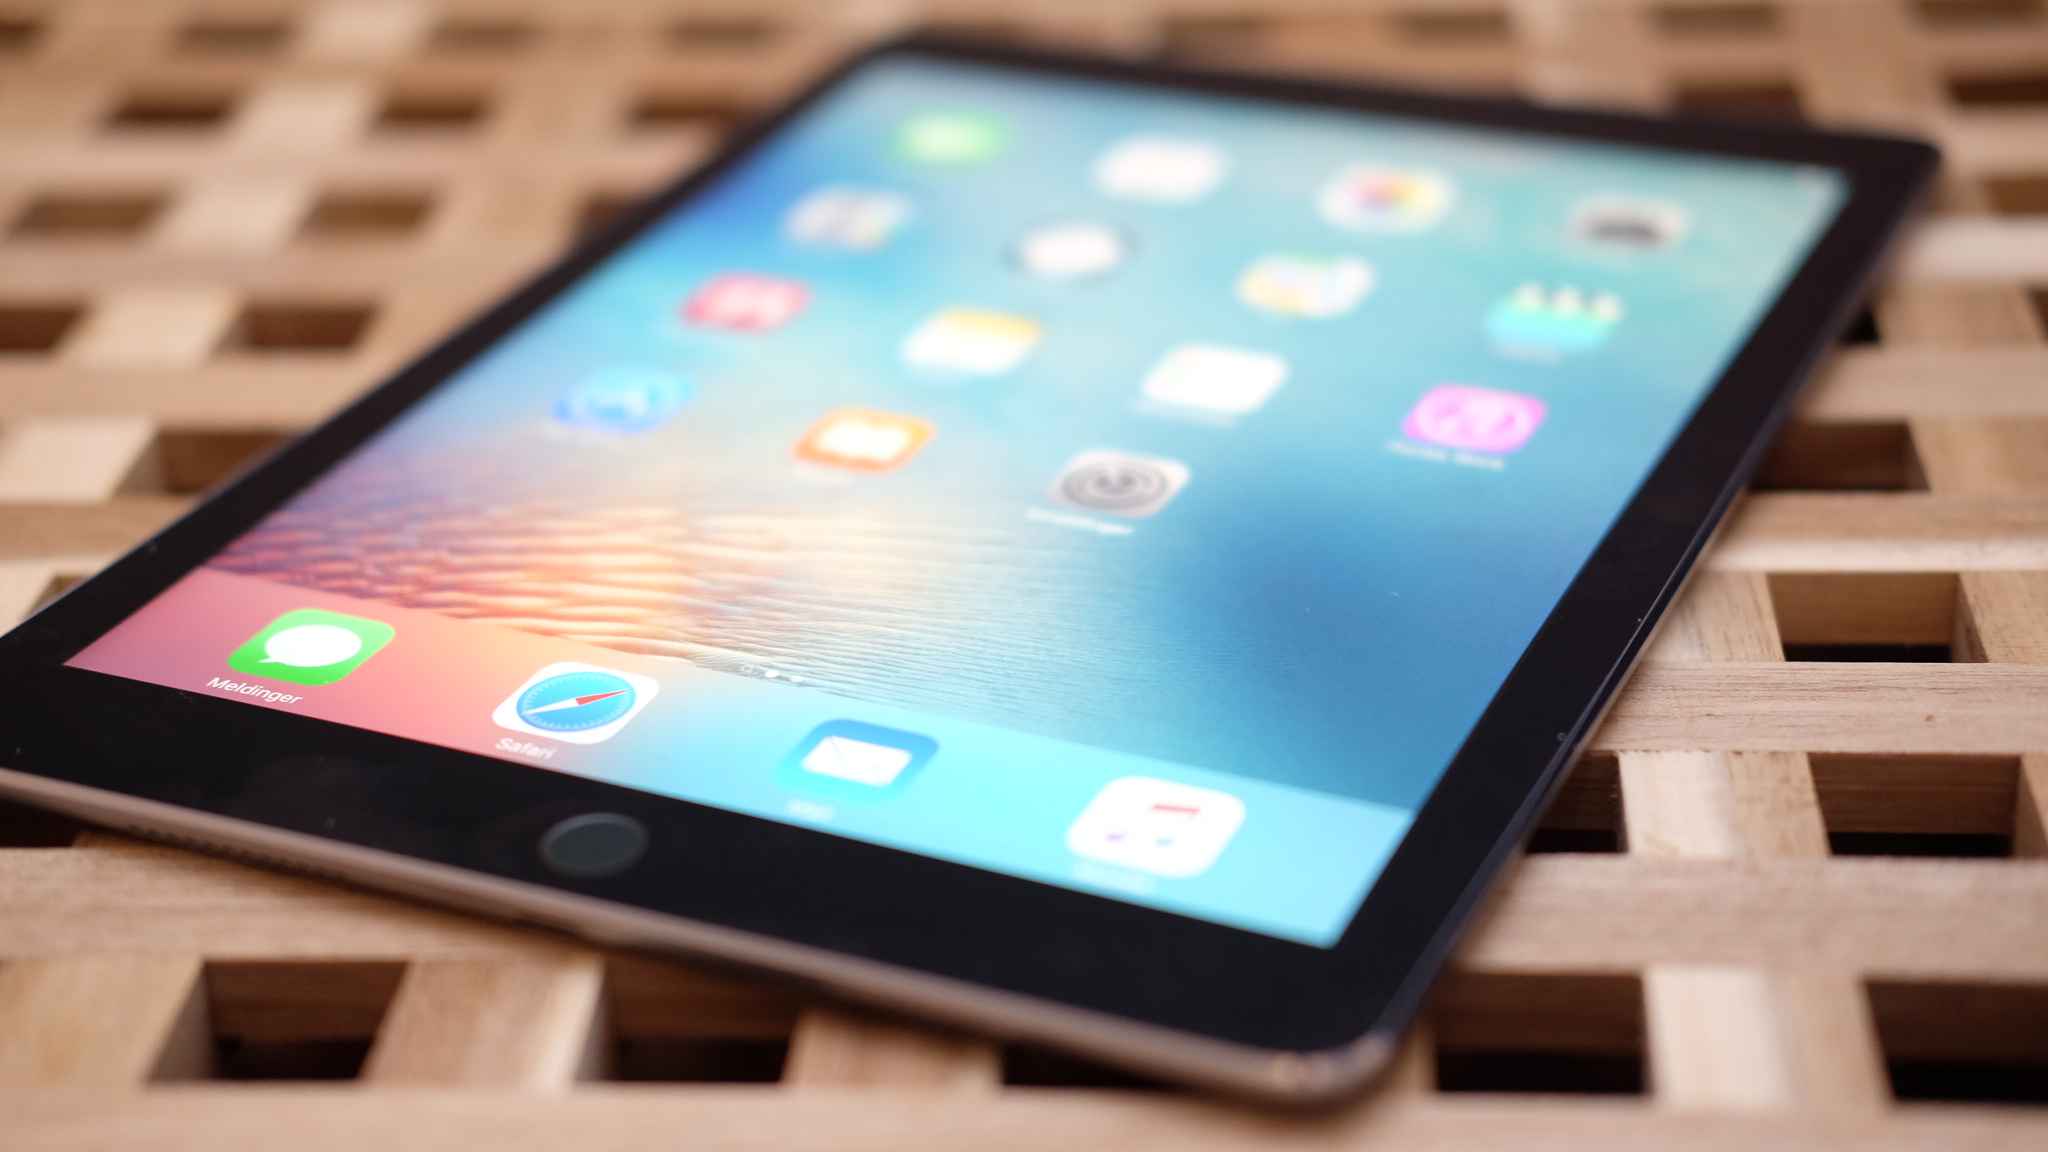 Brukere rapporterer om at iOS 9.3.2 krasjer iPad Proen deres.